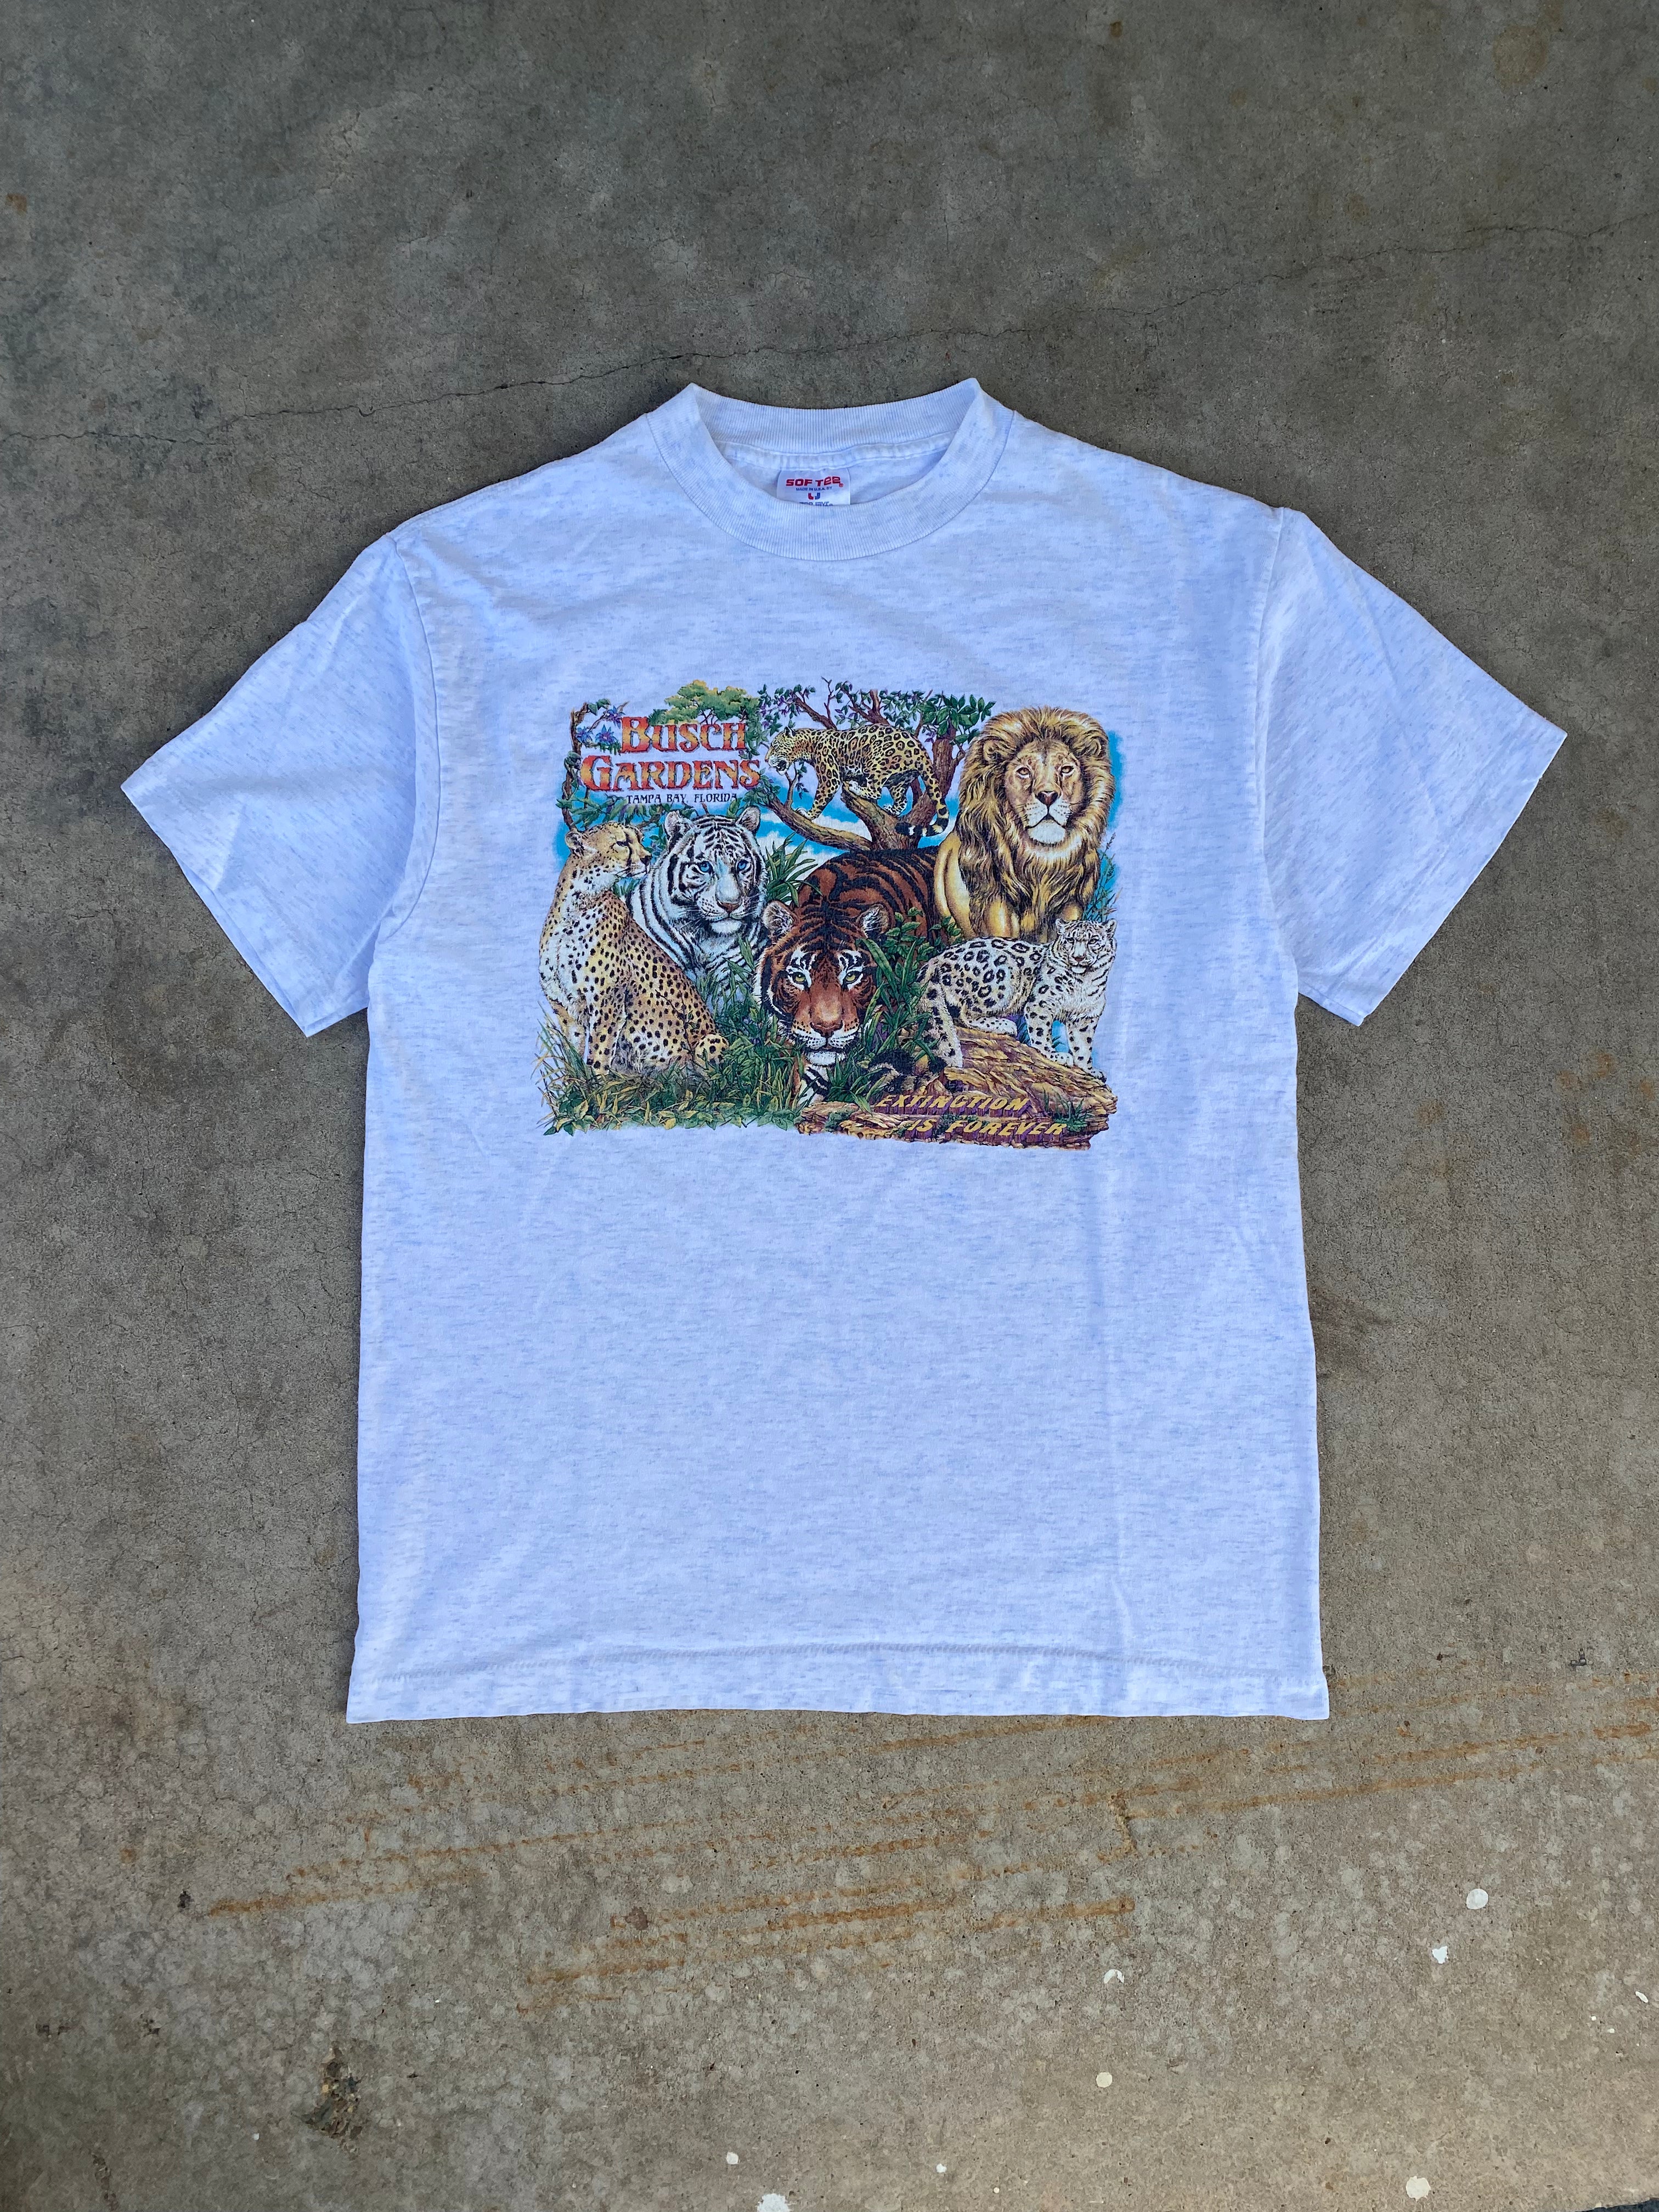 1990s Busch Gardens Extinction is Forever T-Shirt (M/L)